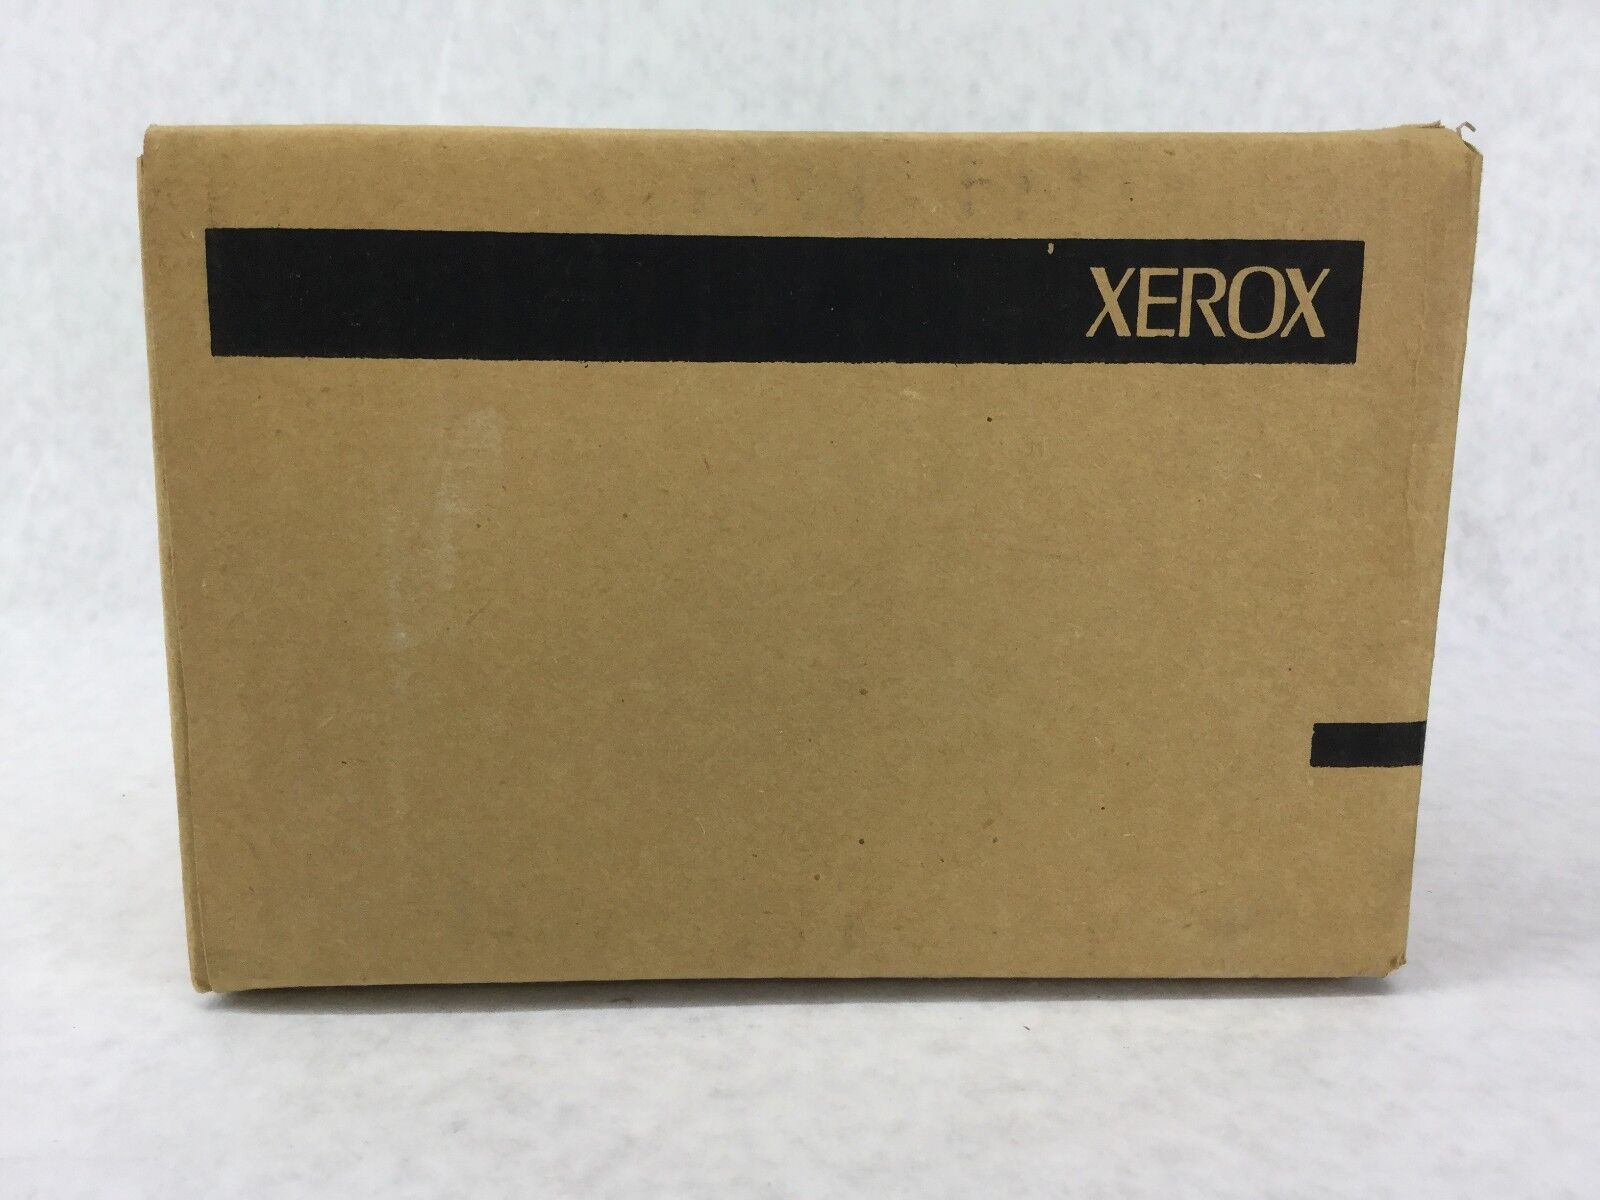 XEROX 600S3277 30A Reptcl Kit New